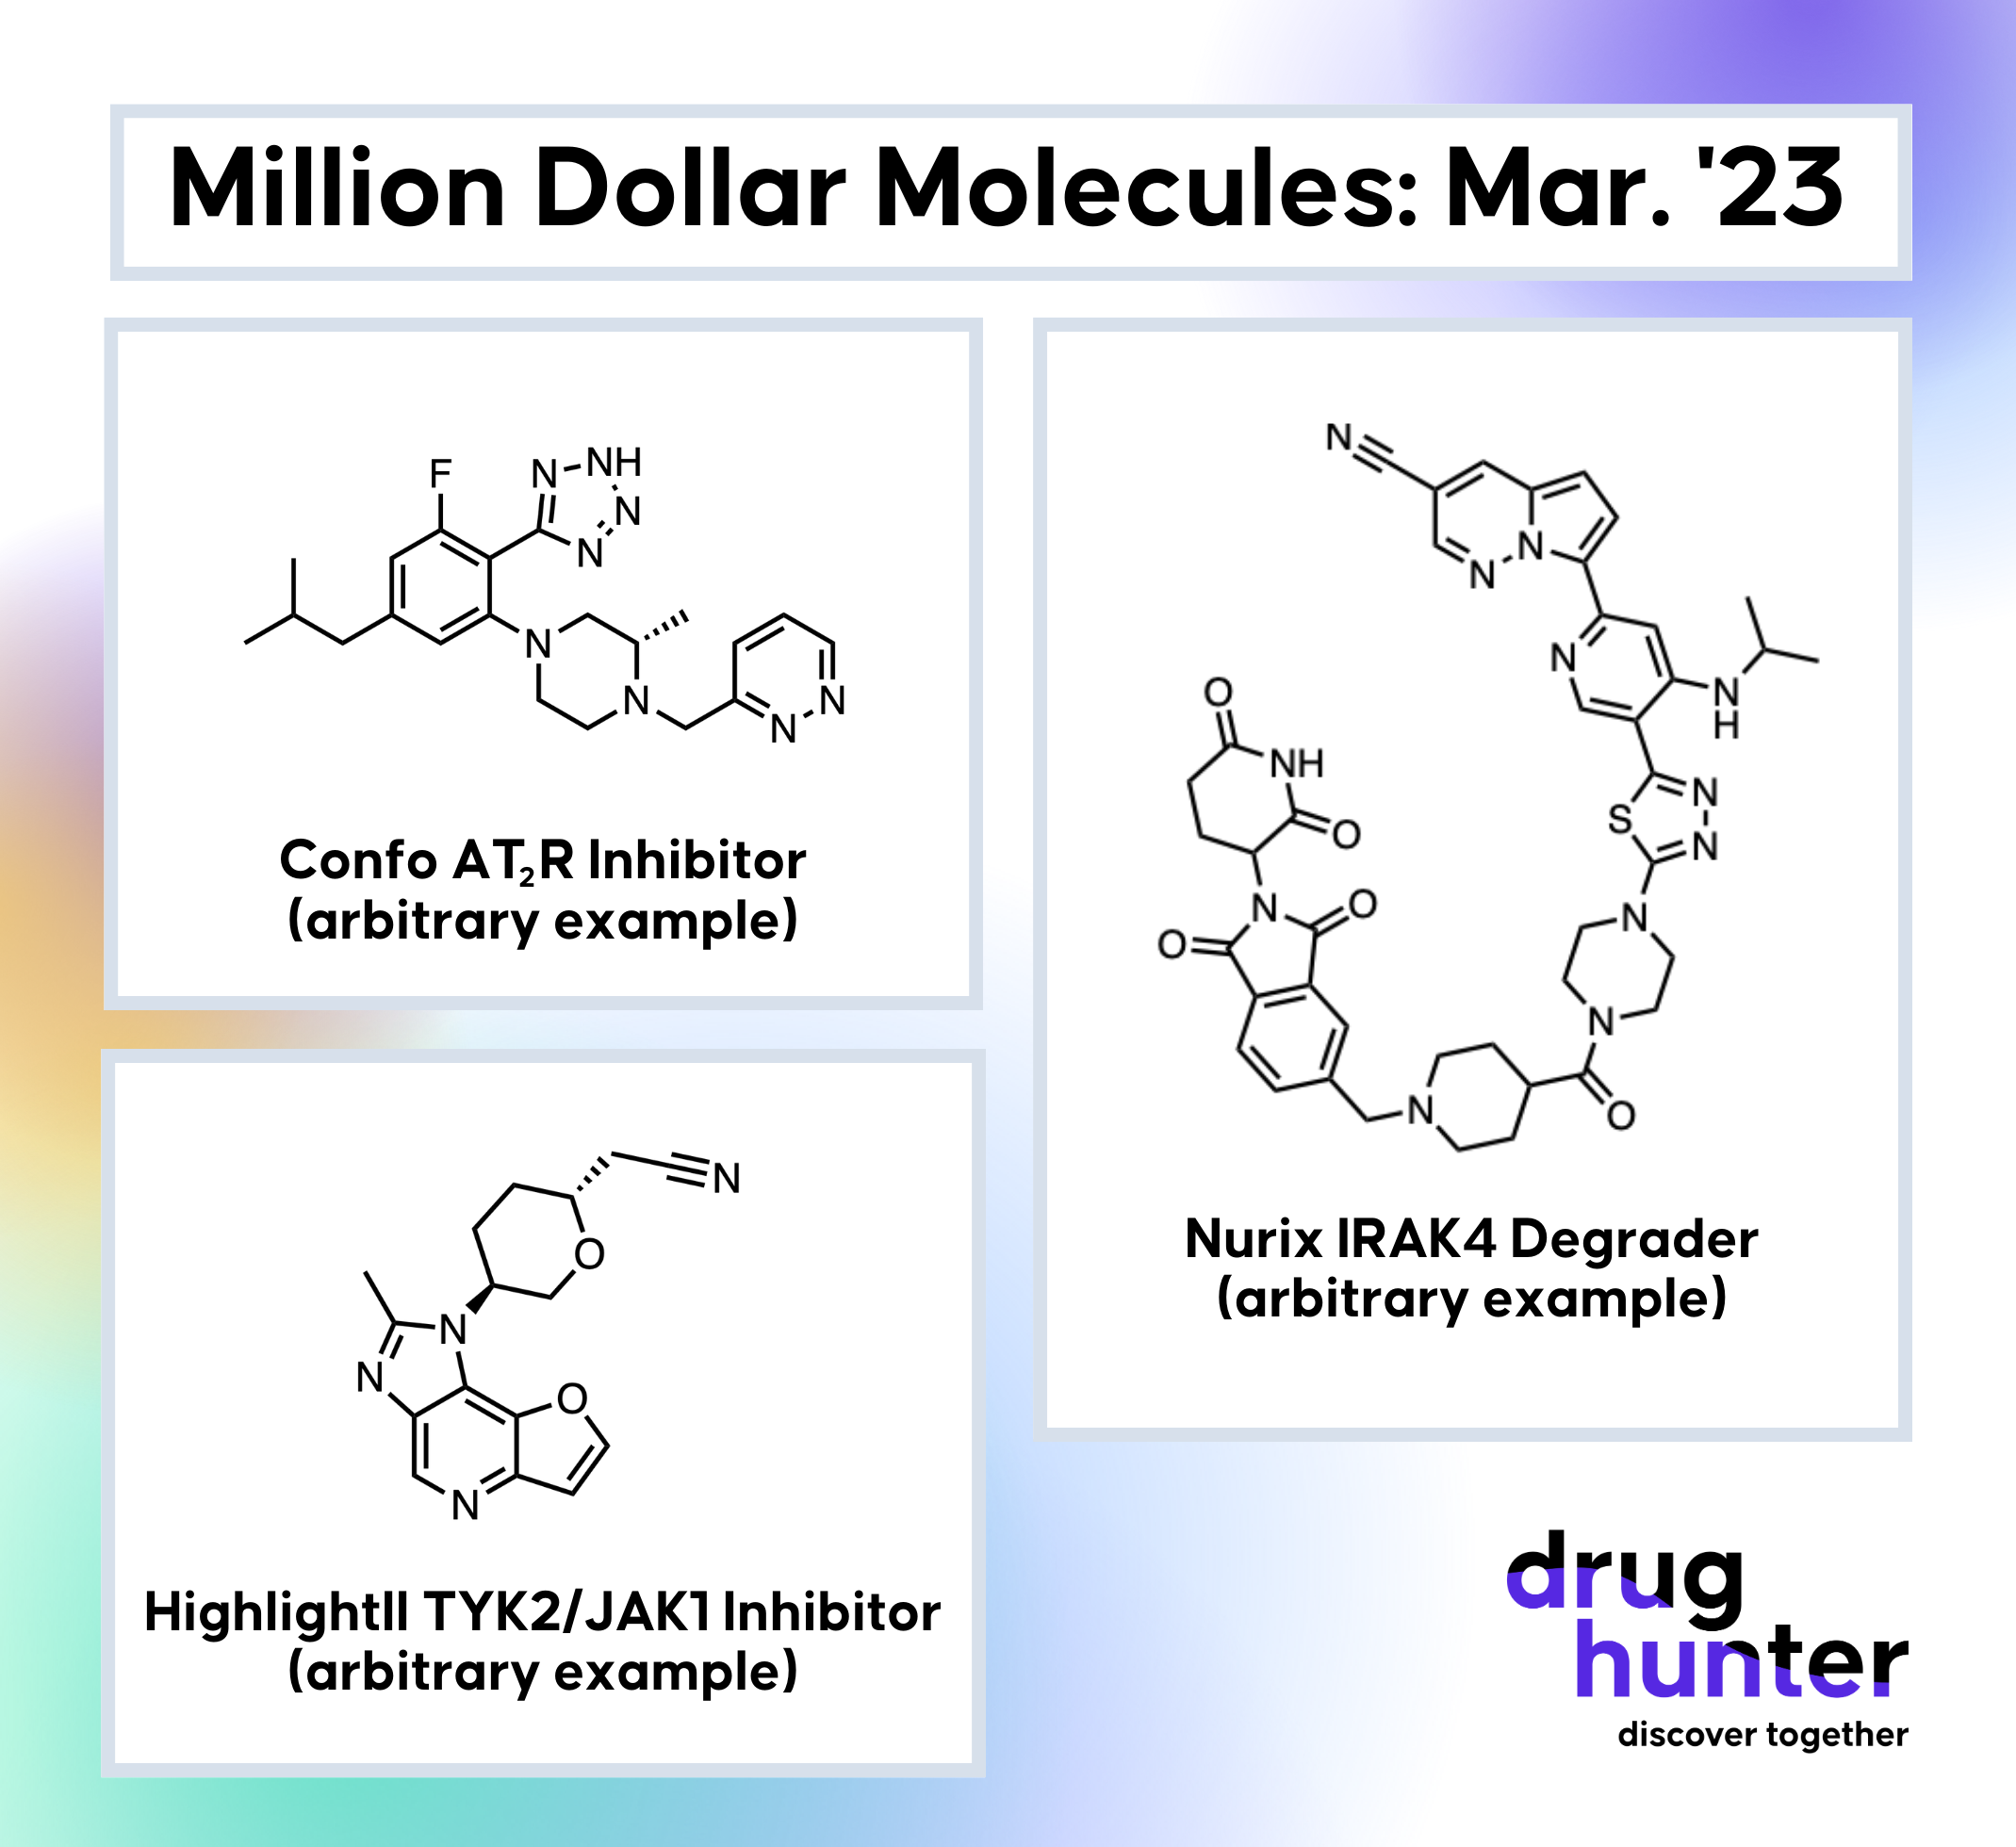 Nurix IRAK4 degrader, Confo AT2R inhibitor, Biohaven Highlightll TYK2/JAK1 inhibitor||||||||million dollar molecules, march 2023, example 174, CFTX-1554, example BB11, GS-6791, NX-0479, compound I, BHV-8000, TLL-041|||||||||||||